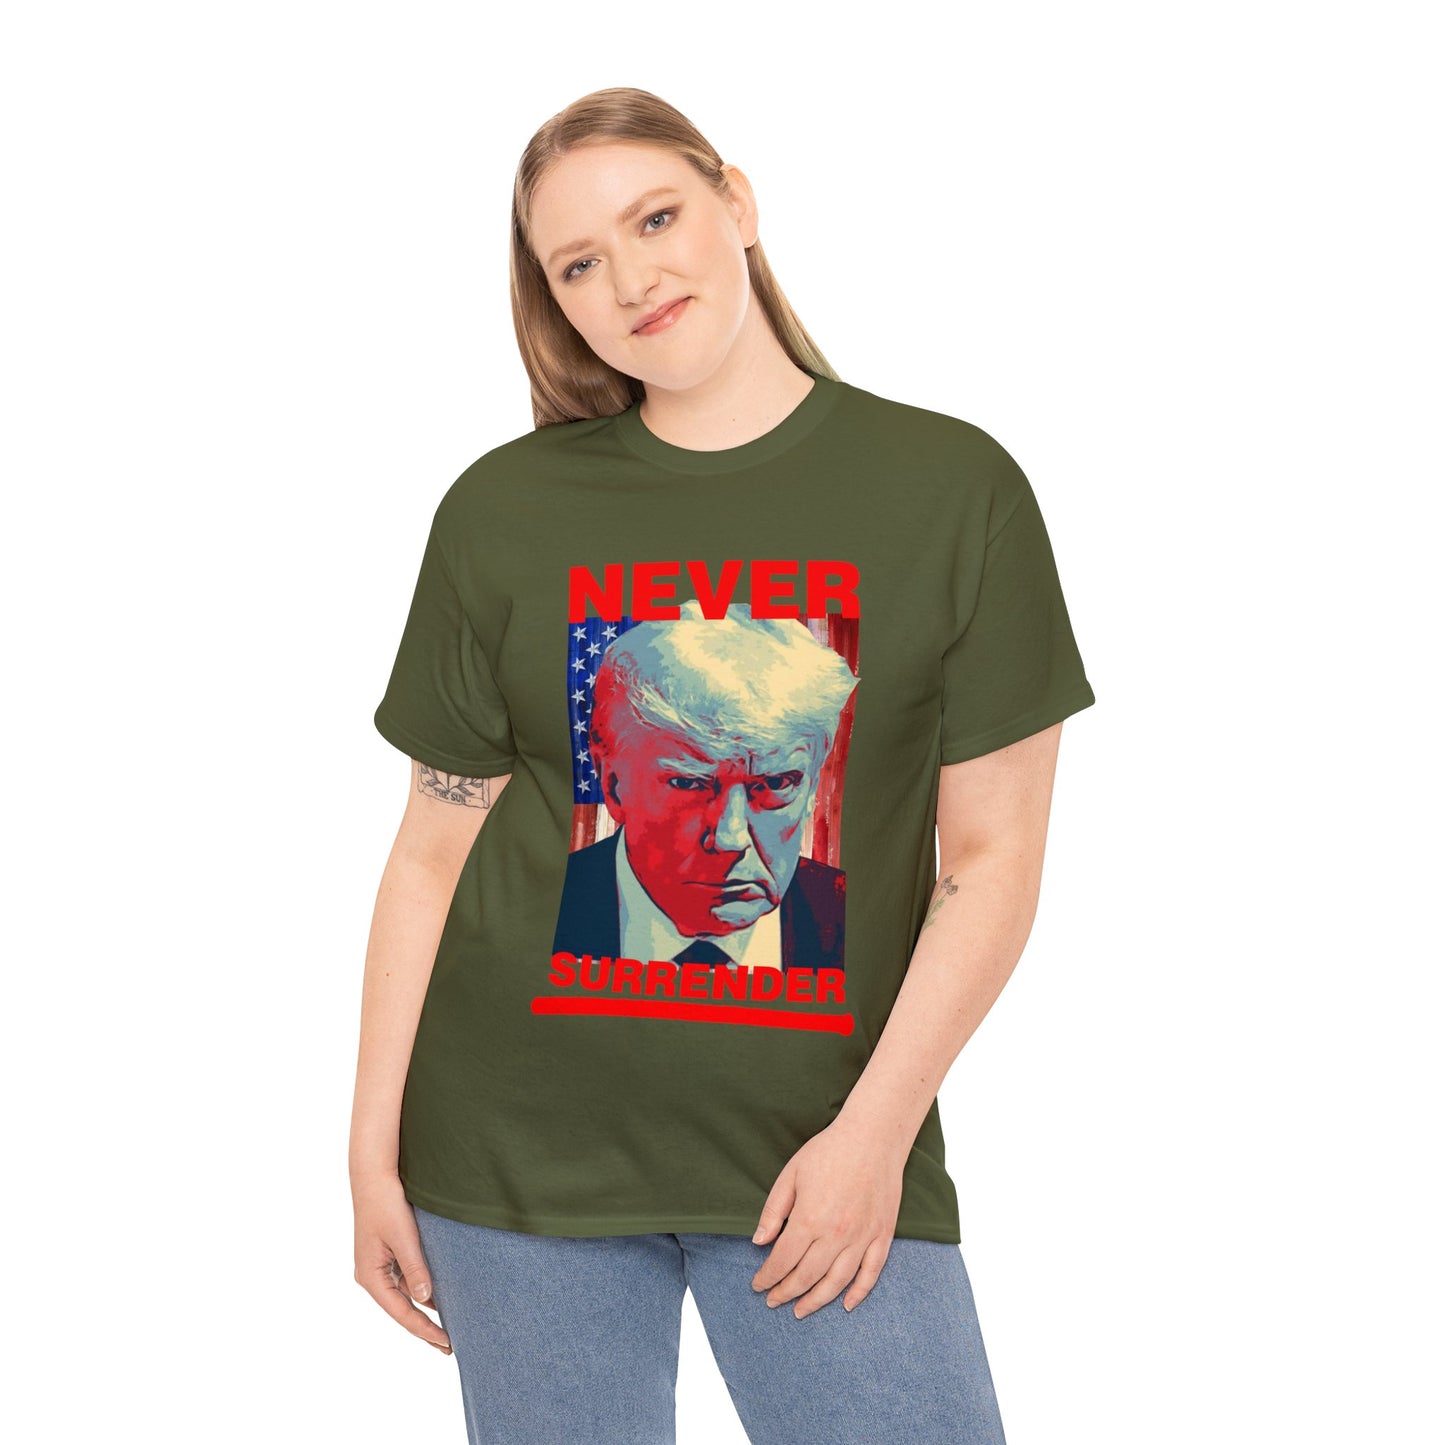 Never Surrender Trump Shirt